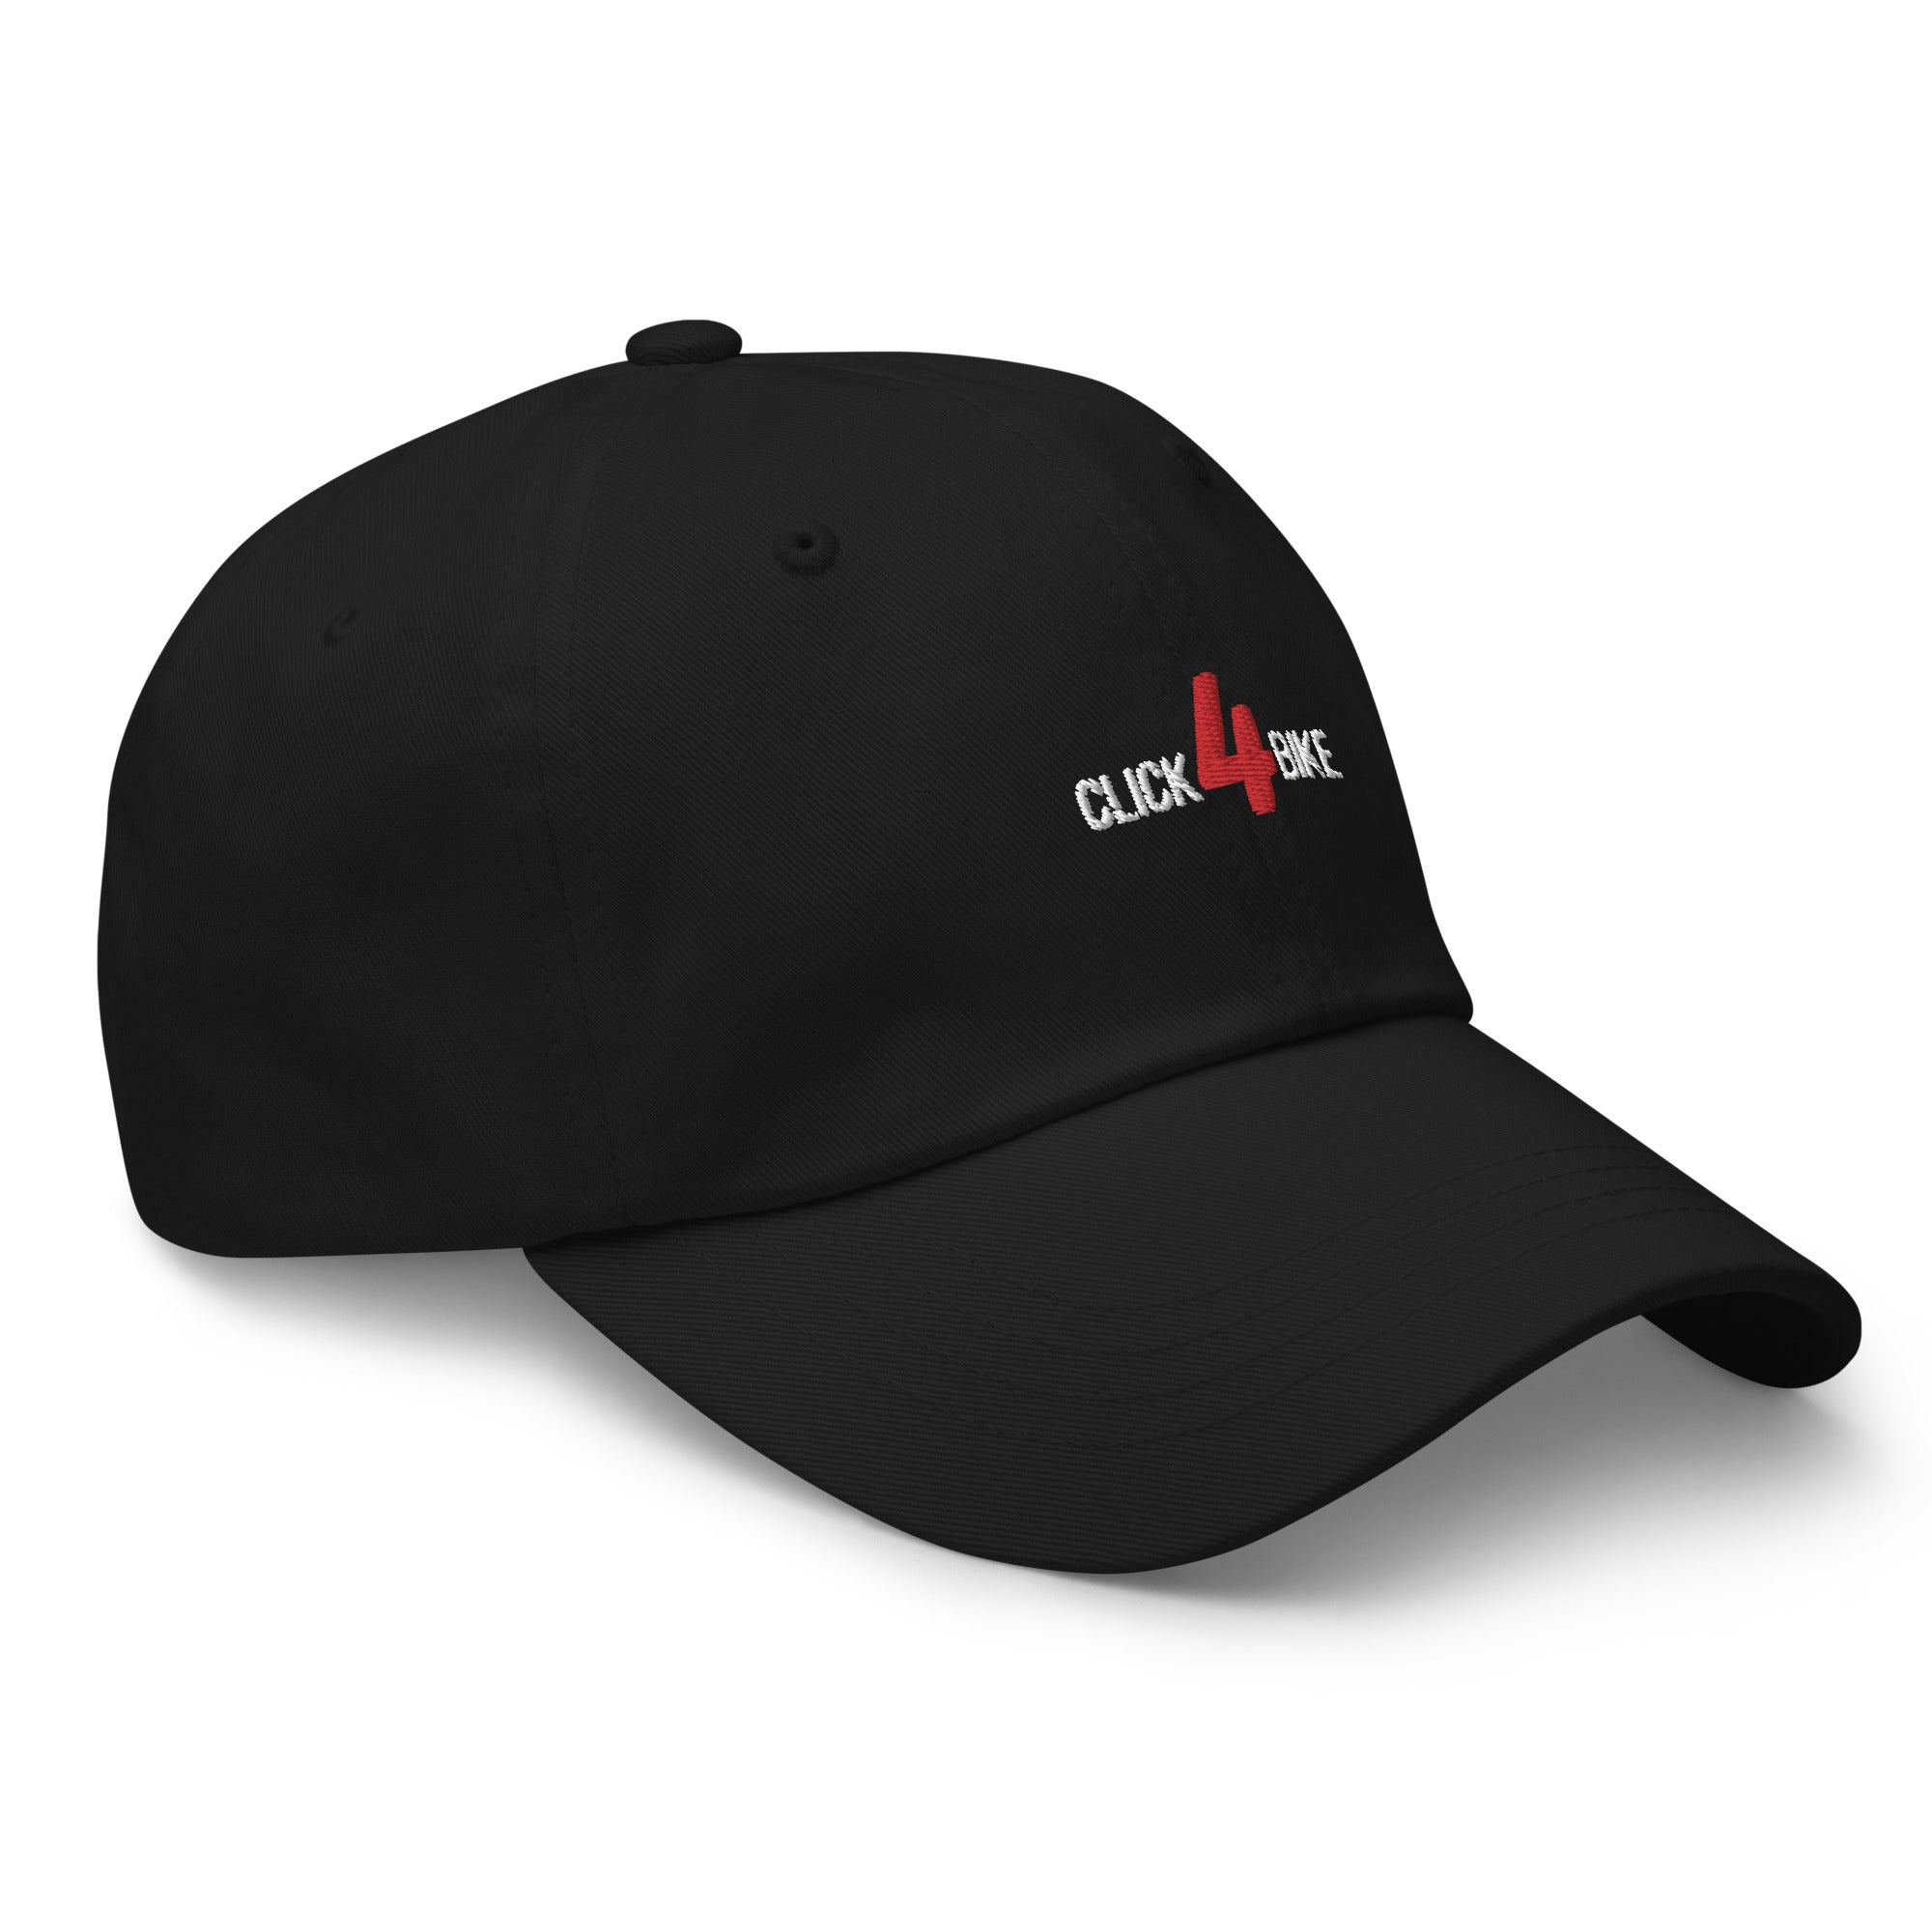 Click4Bike Dad-Hat